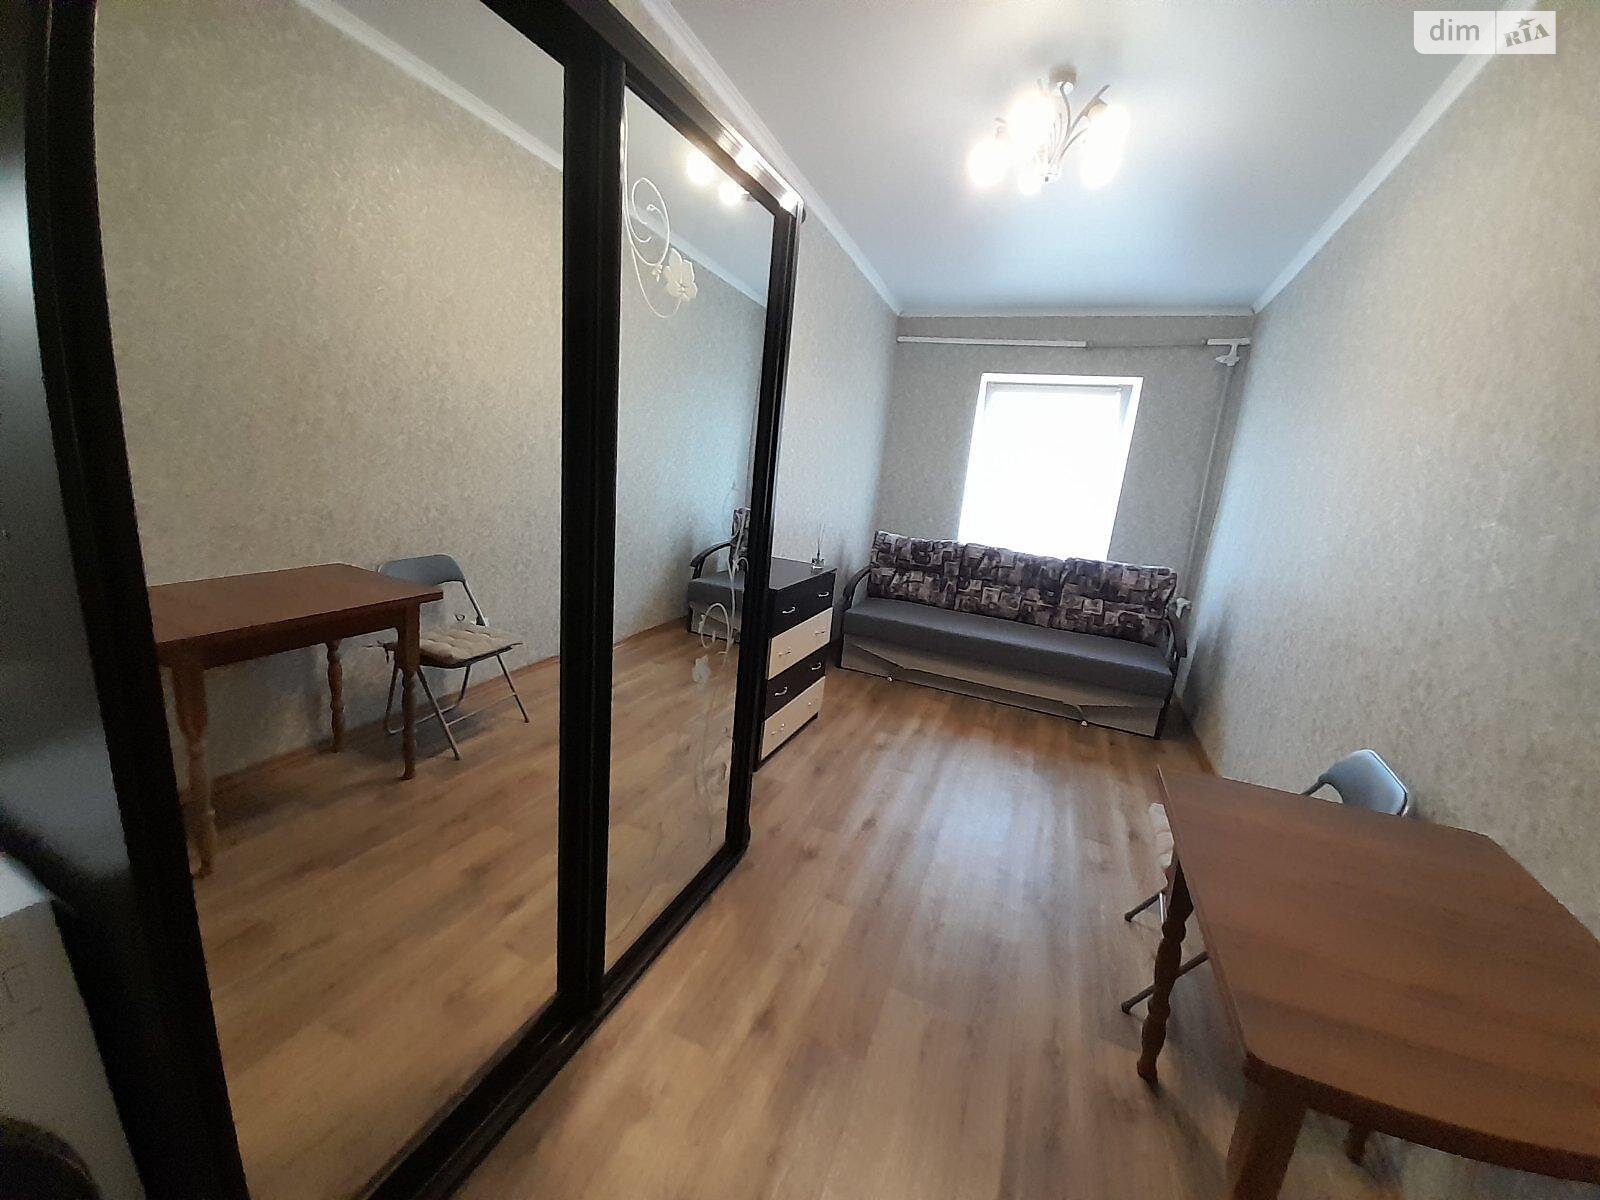 Кімната в Одесі на вул. Новікова 12А в районі Застава 2 на продаж фото 1